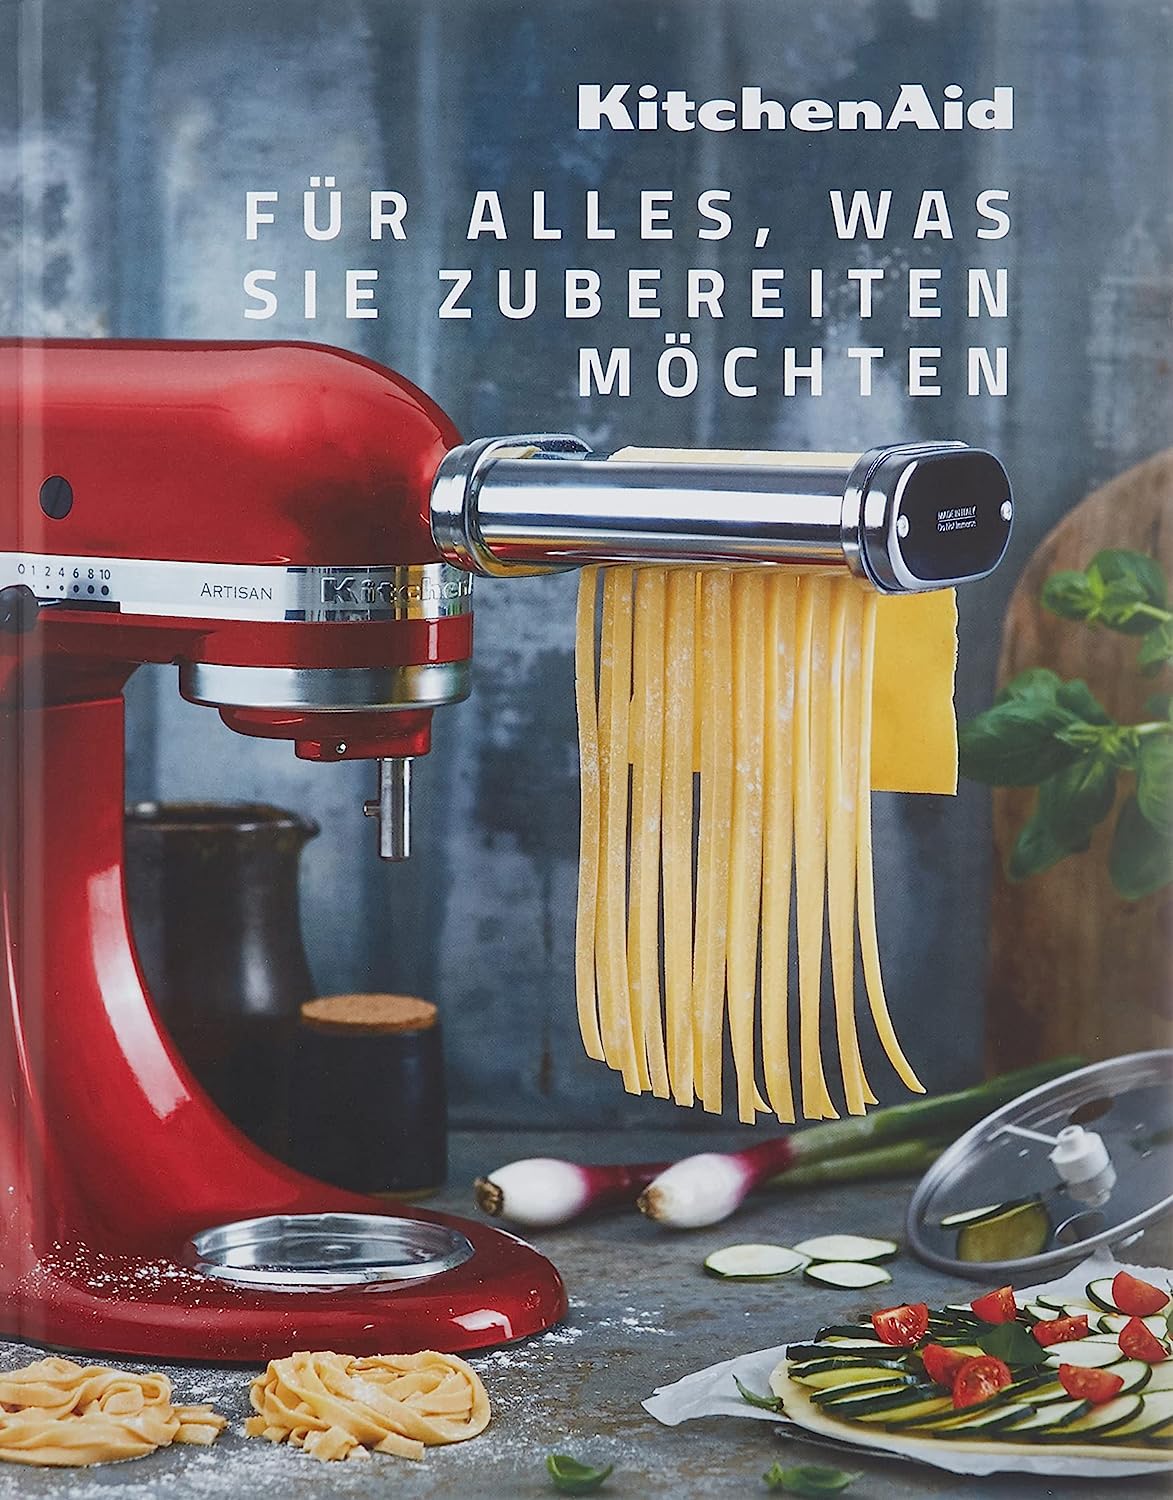 Kitchenaid cccb_de cookbook German Language Edition